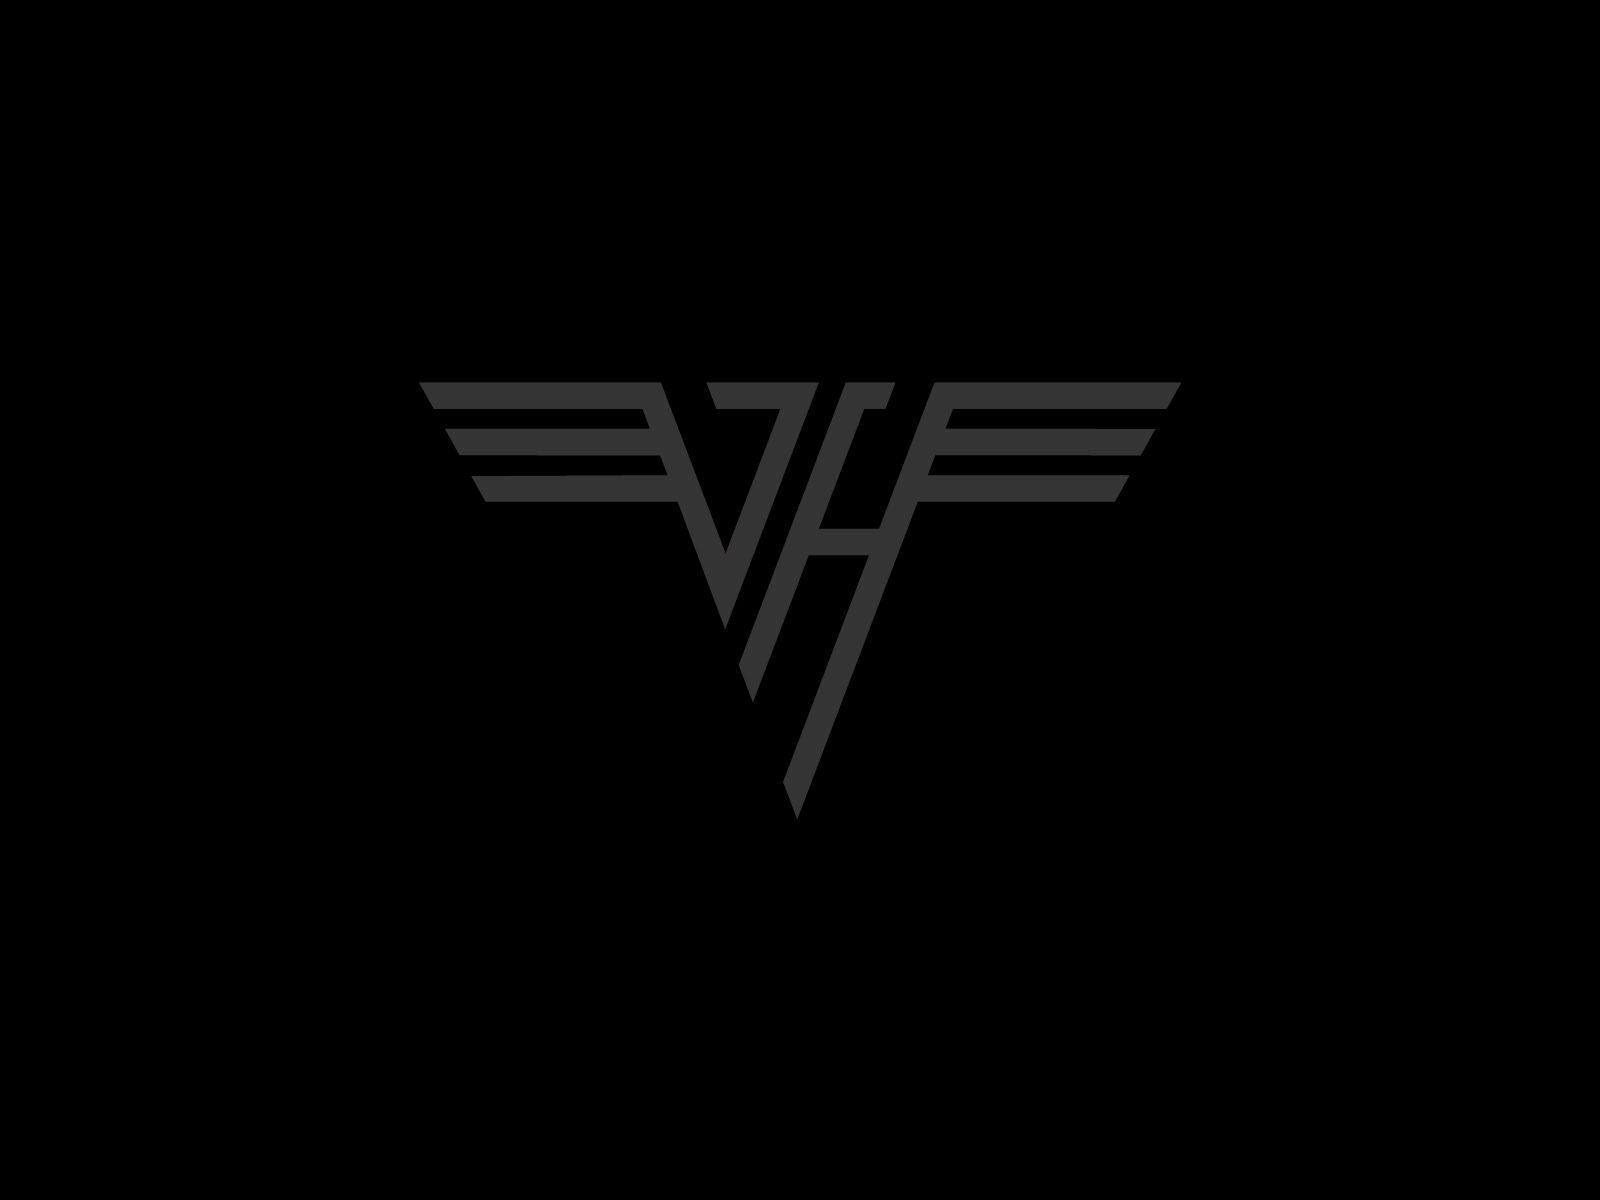 Van Halen logo and wallpaper. Band logos band logos, metal